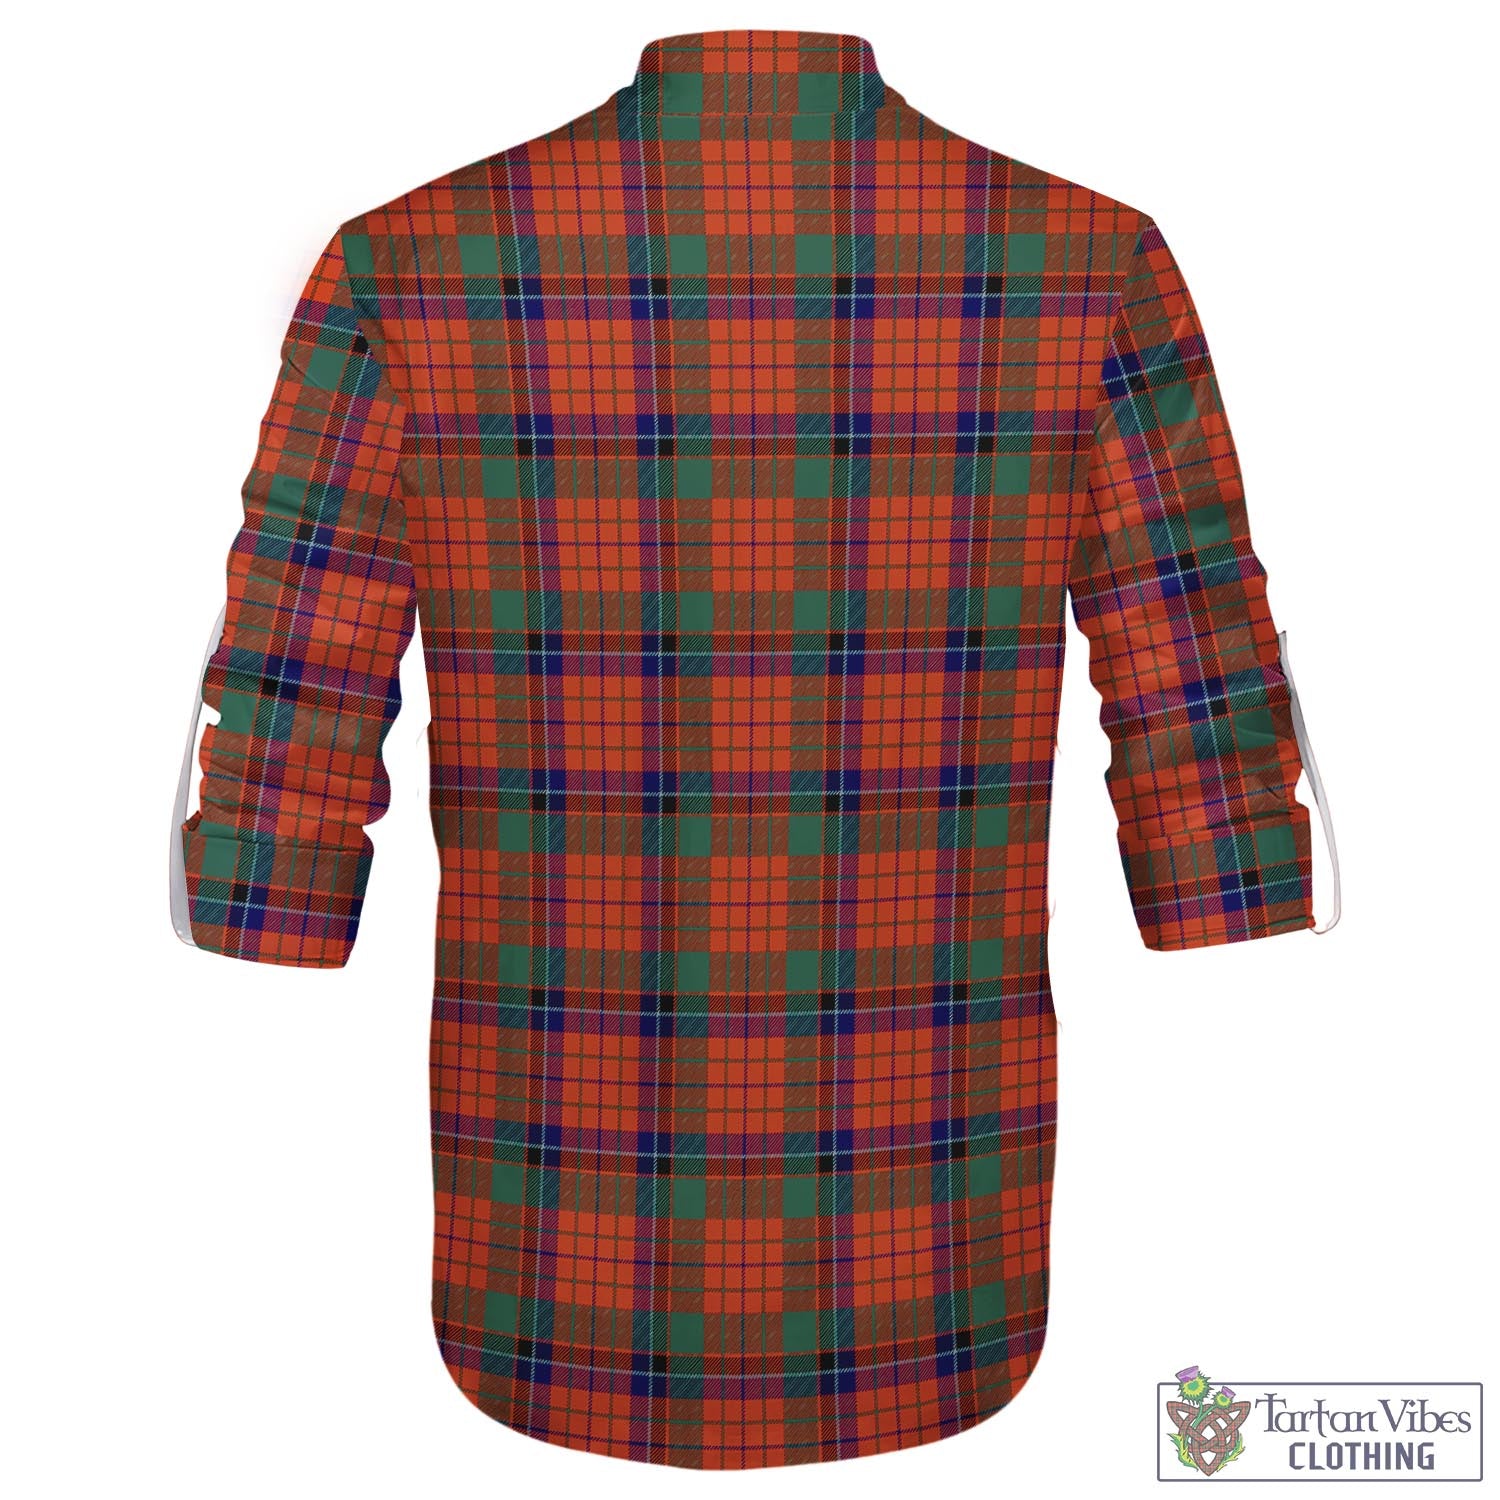 Tartan Vibes Clothing Nicolson Ancient Tartan Men's Scottish Traditional Jacobite Ghillie Kilt Shirt